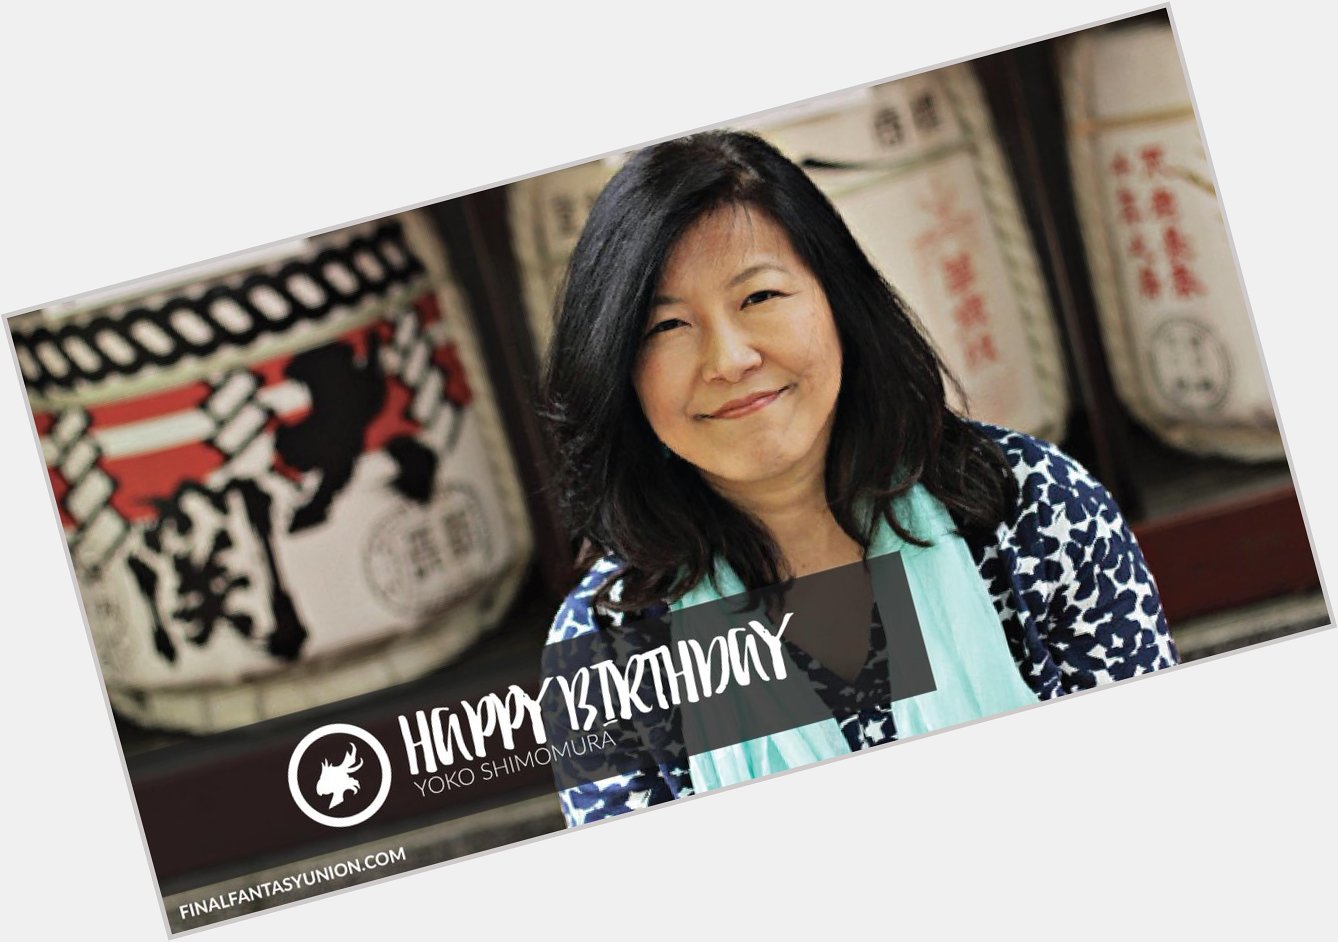 Happy 48th Birthday to Yoko Shimomura // Final Fantasy XV Composer  